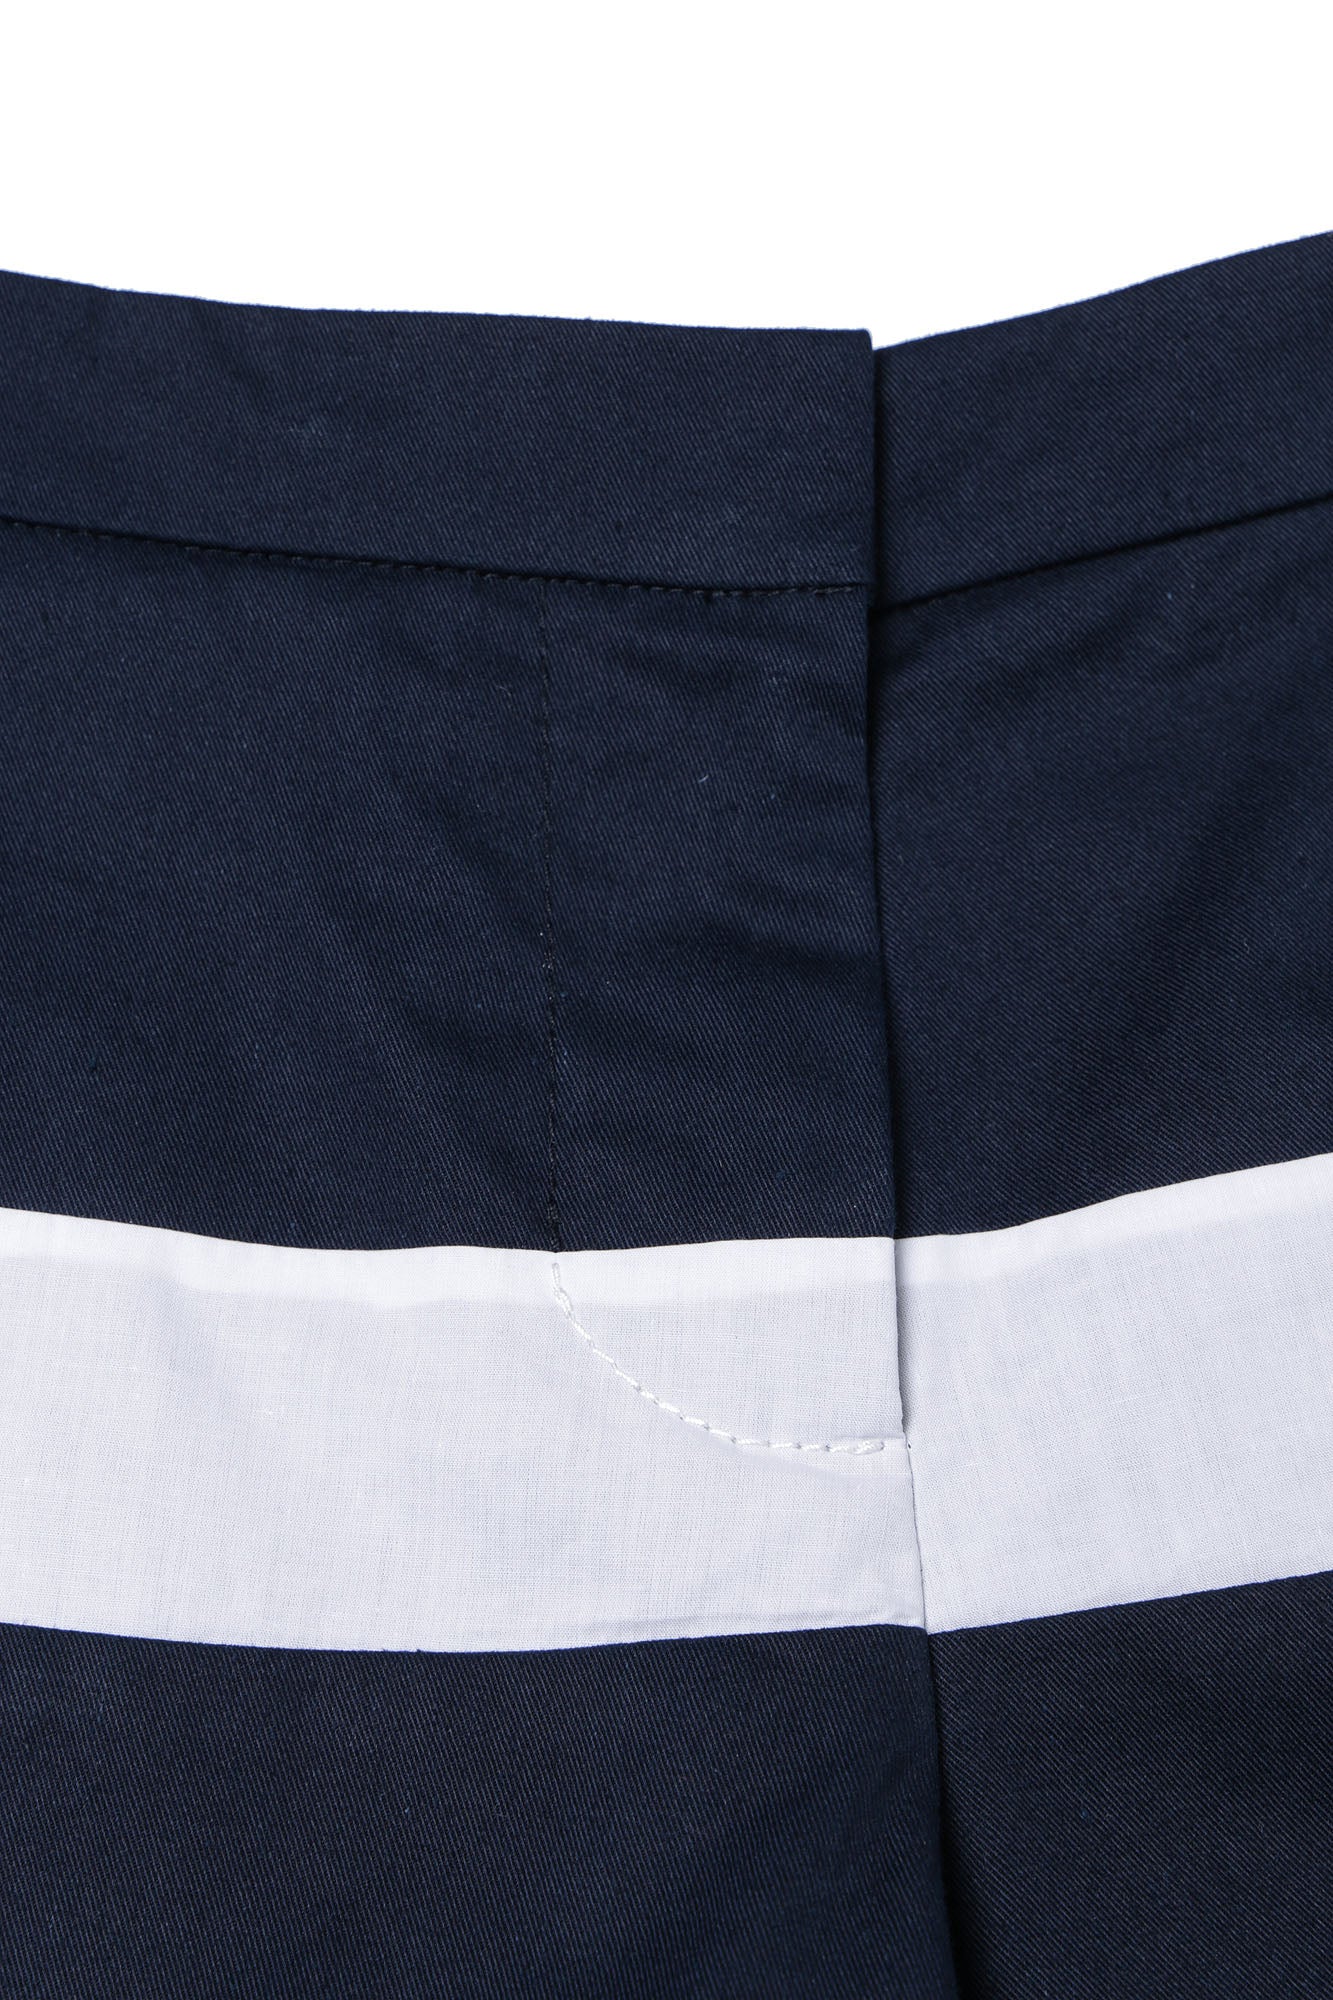 Girls Navy Cotton Shorts